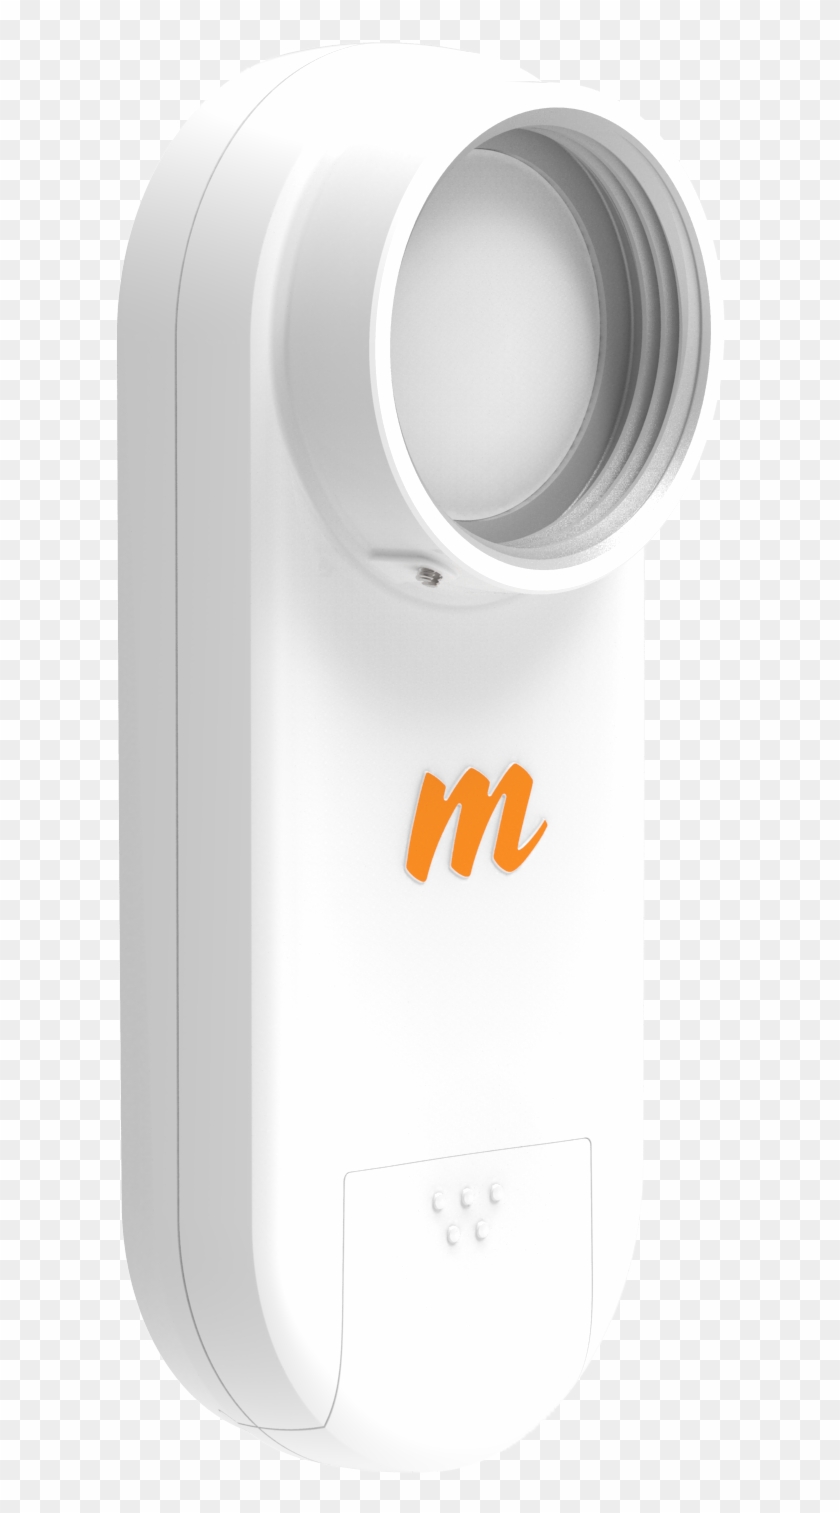 Mimosa C5x 5ghz Modular Radio - Gadget Clipart #2552477